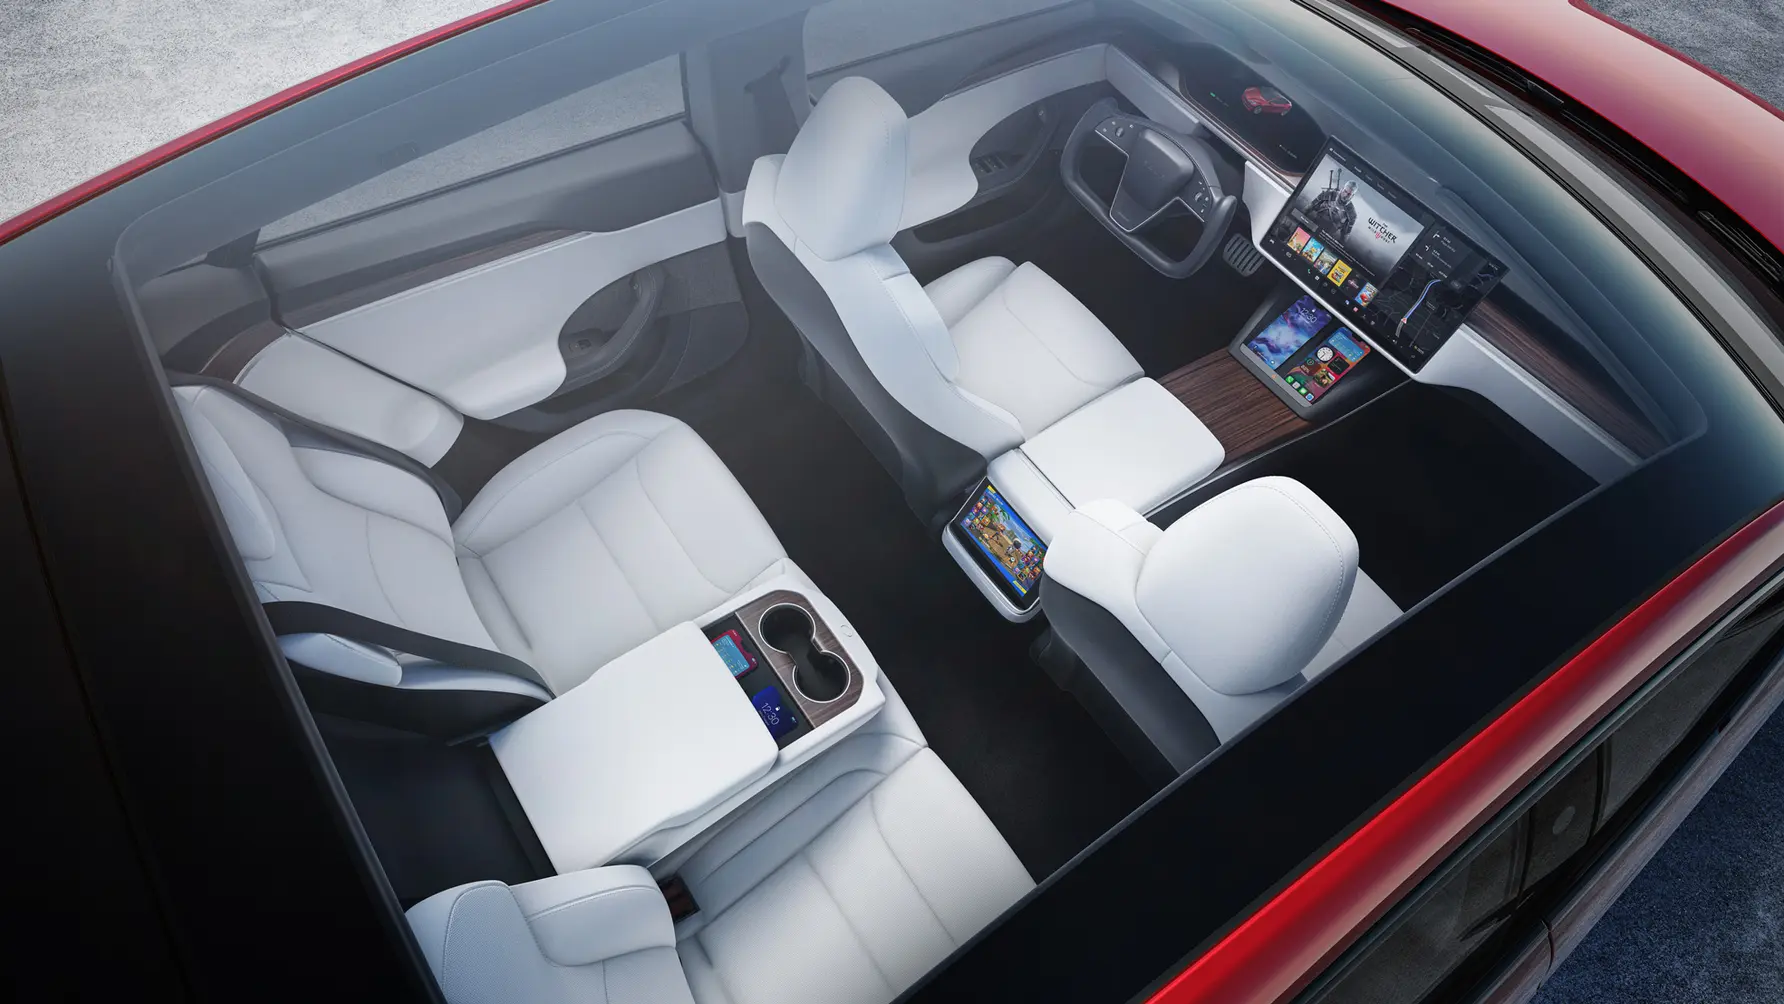 Innovative Technology and Design: The Tesla Model S